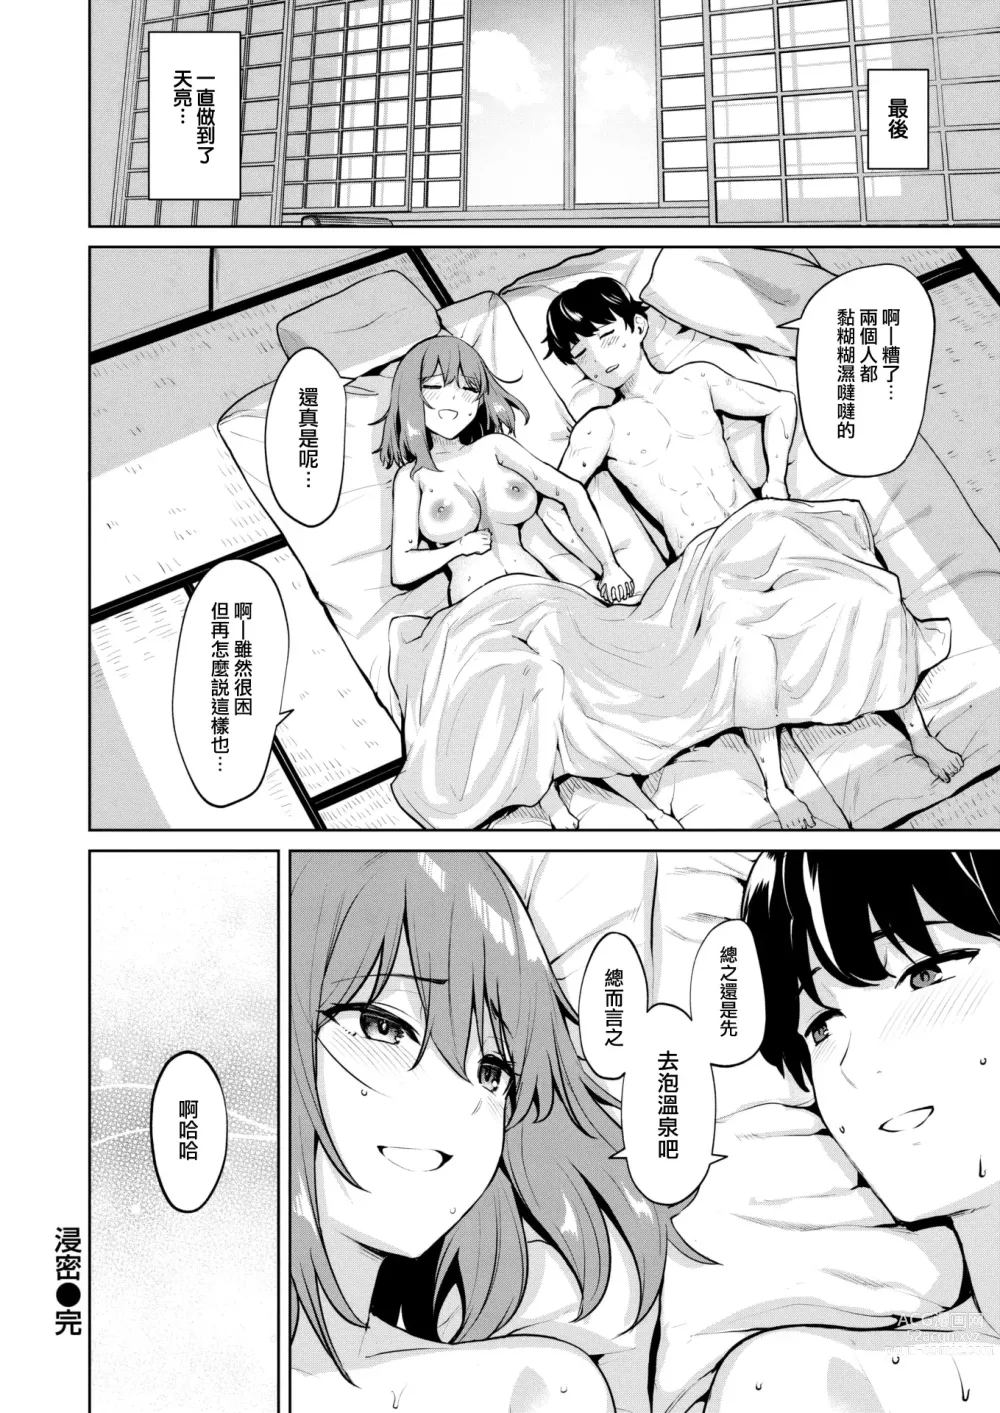 Page 25 of manga Shinnmitsu